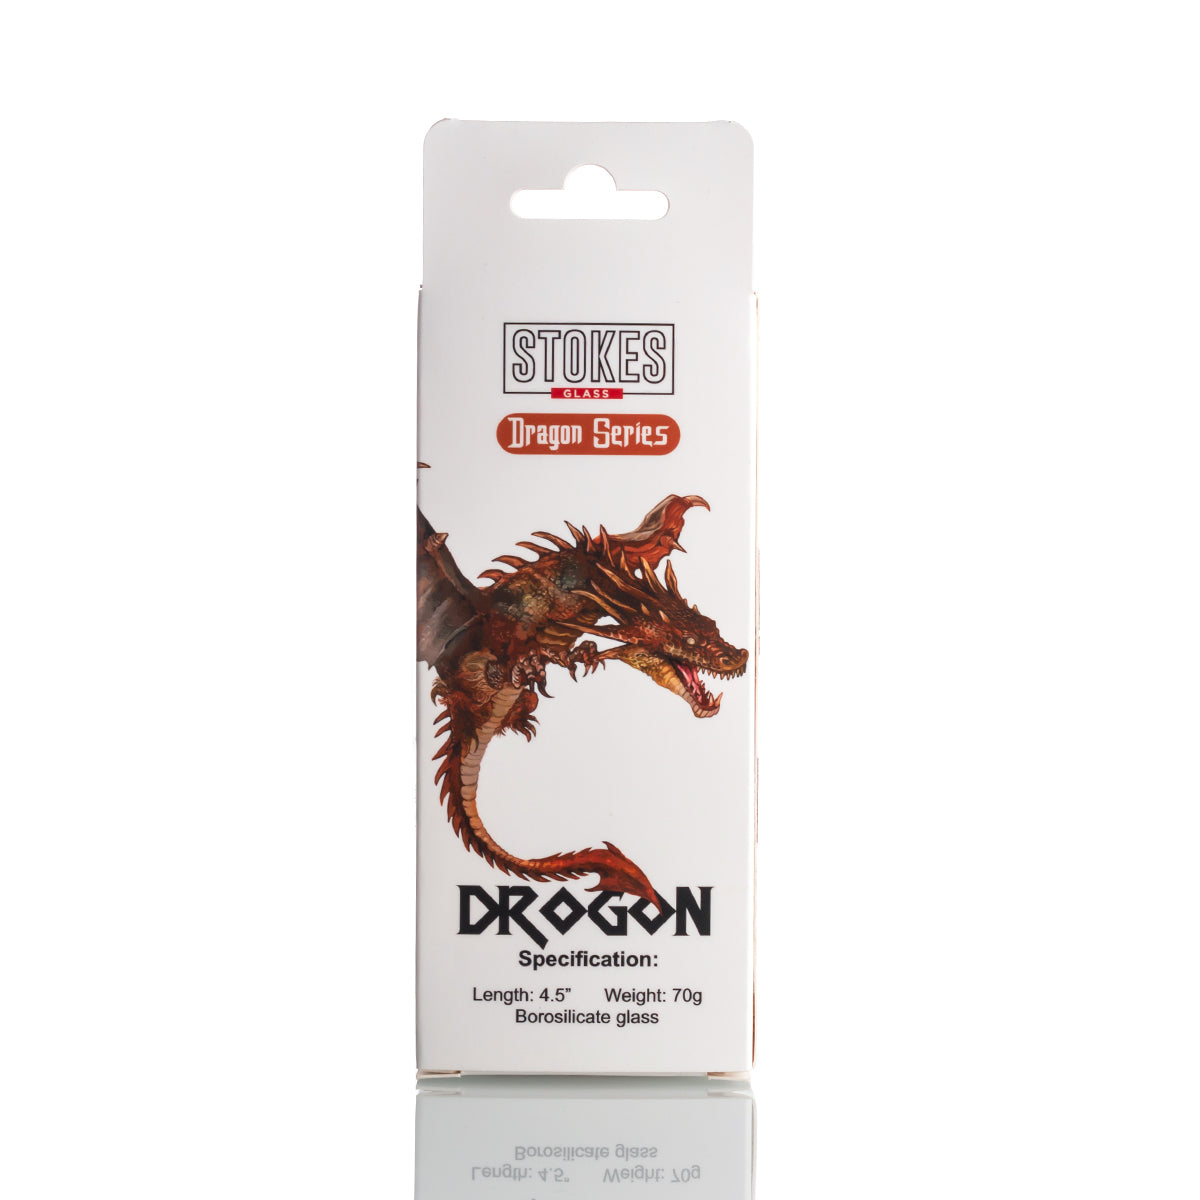 STOKES - Glass Hand Pipe Dragon series - Drogon